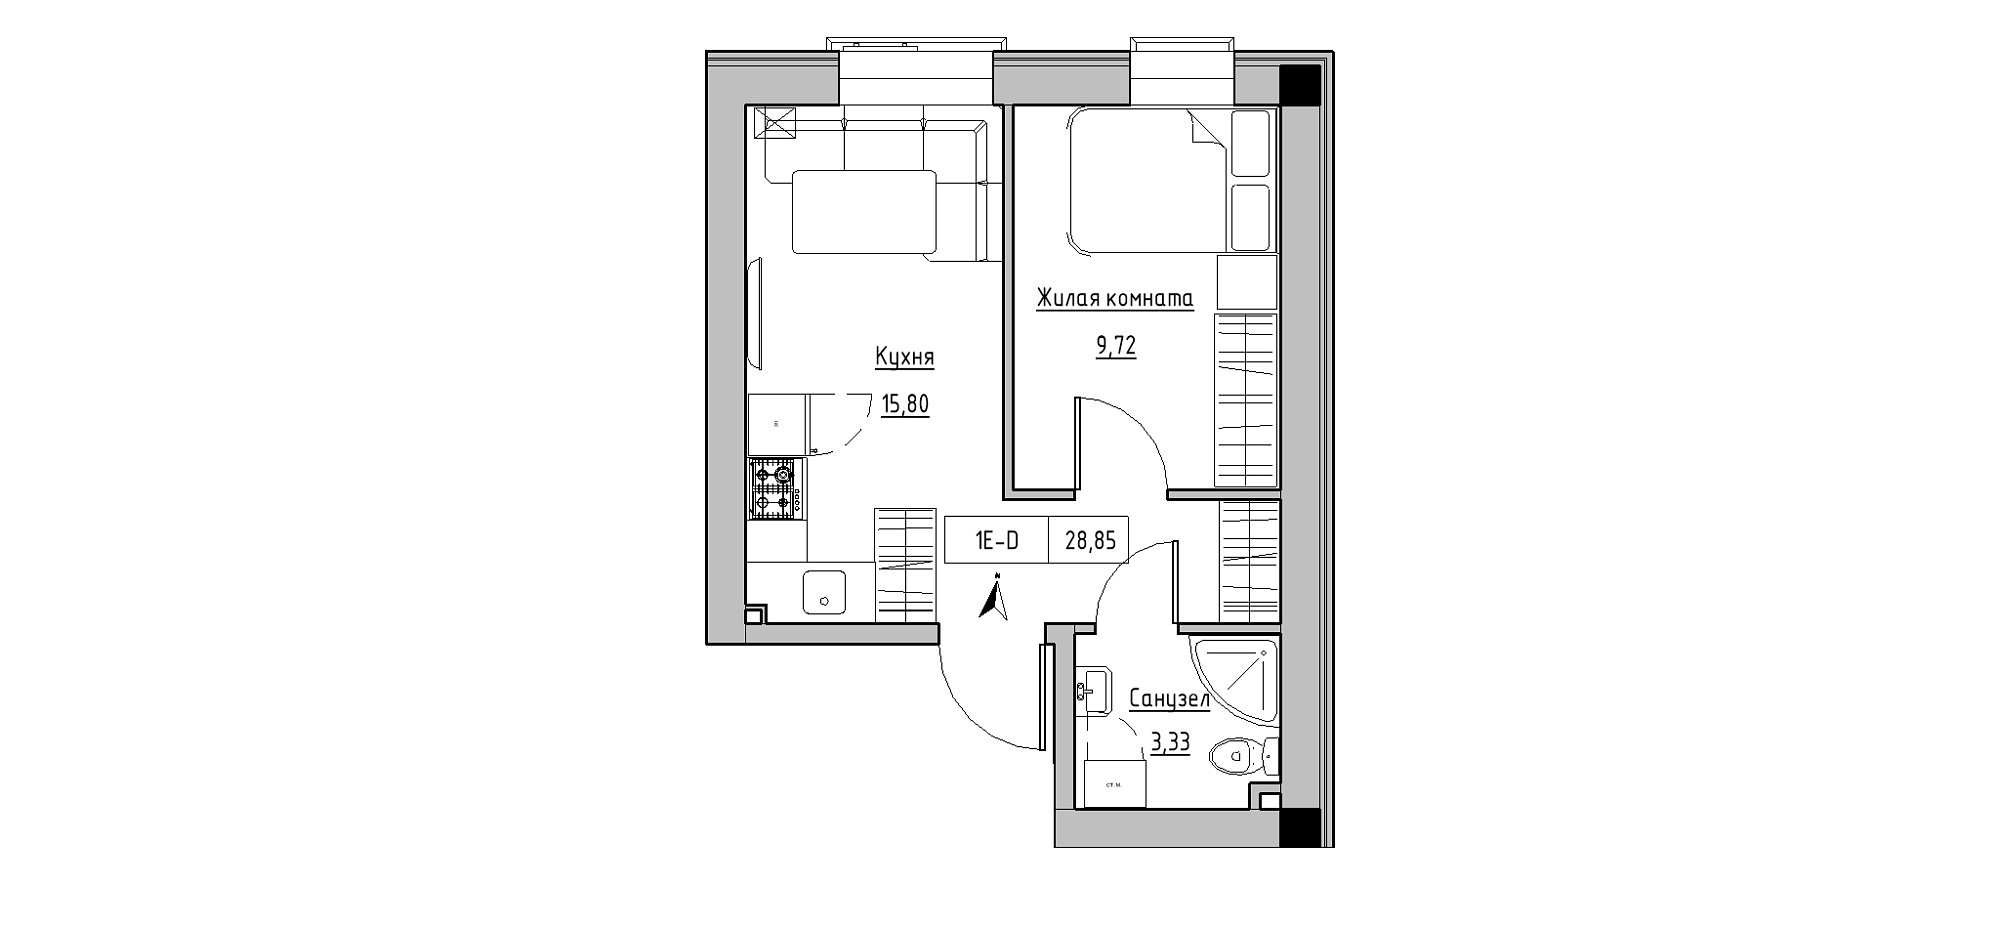 Planning 1-rm flats area 28.85m2, KS-020-01/0002.